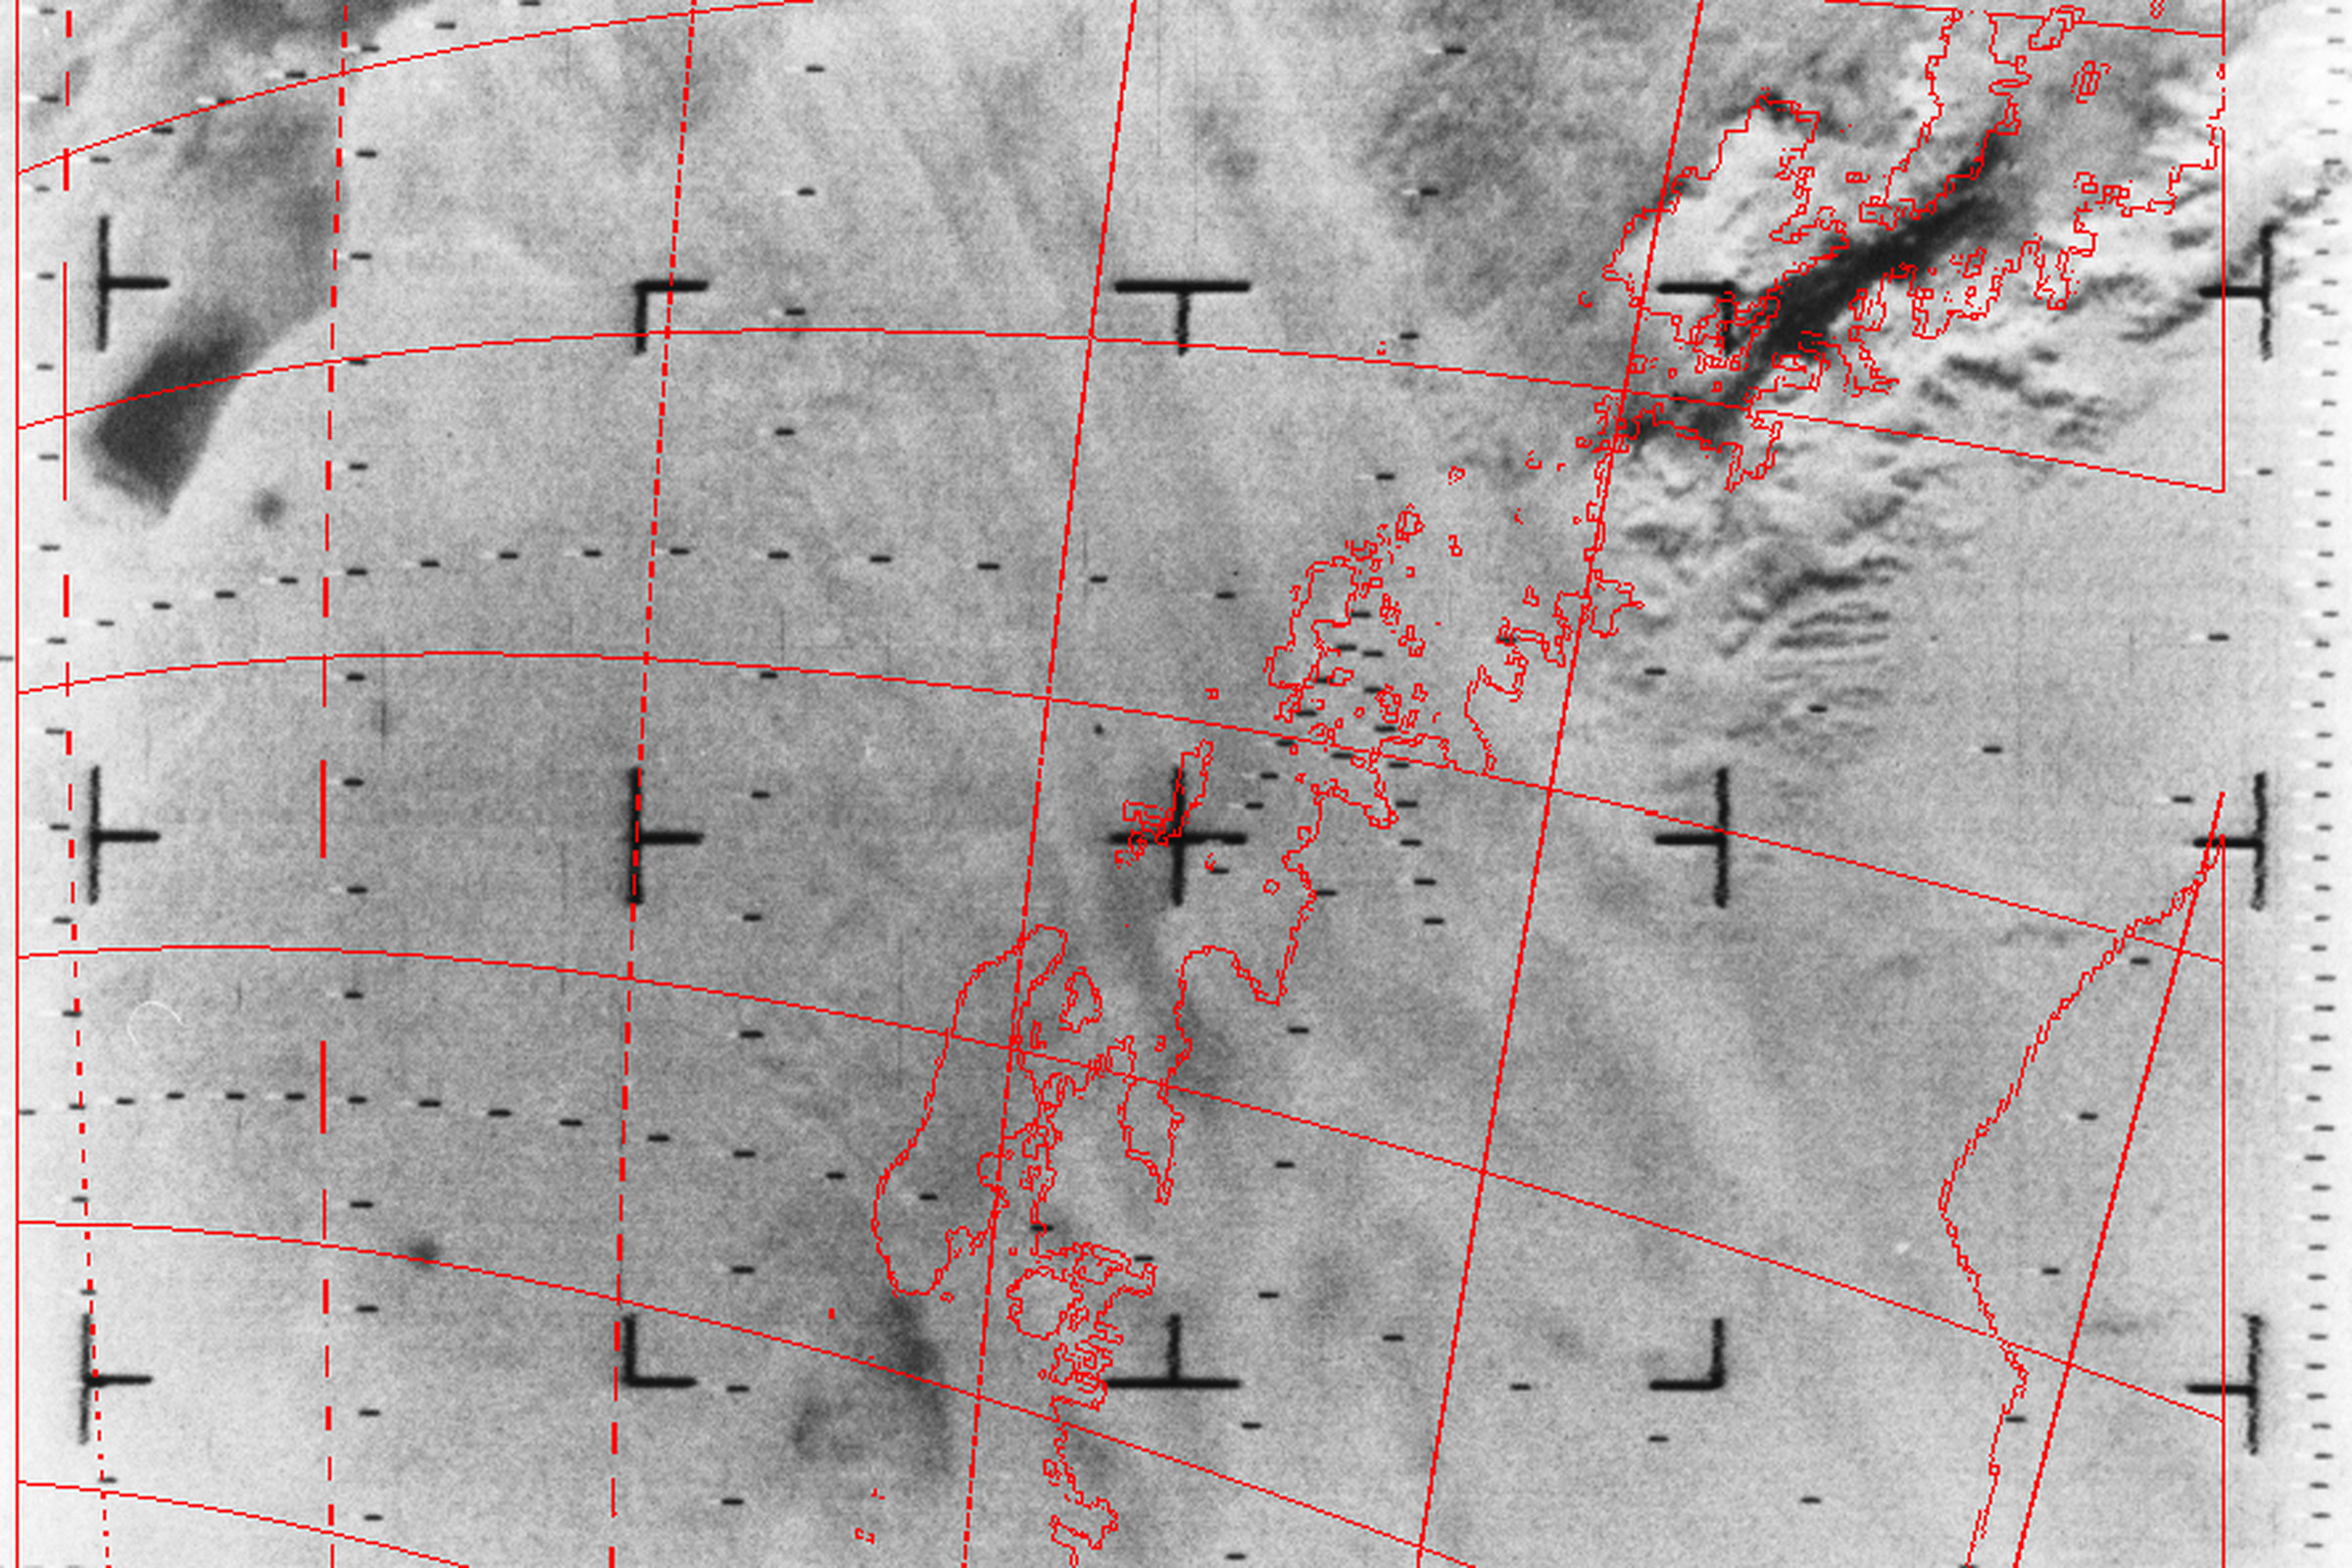 First satellite image captured by NASA's Nimbus satellite in 1964